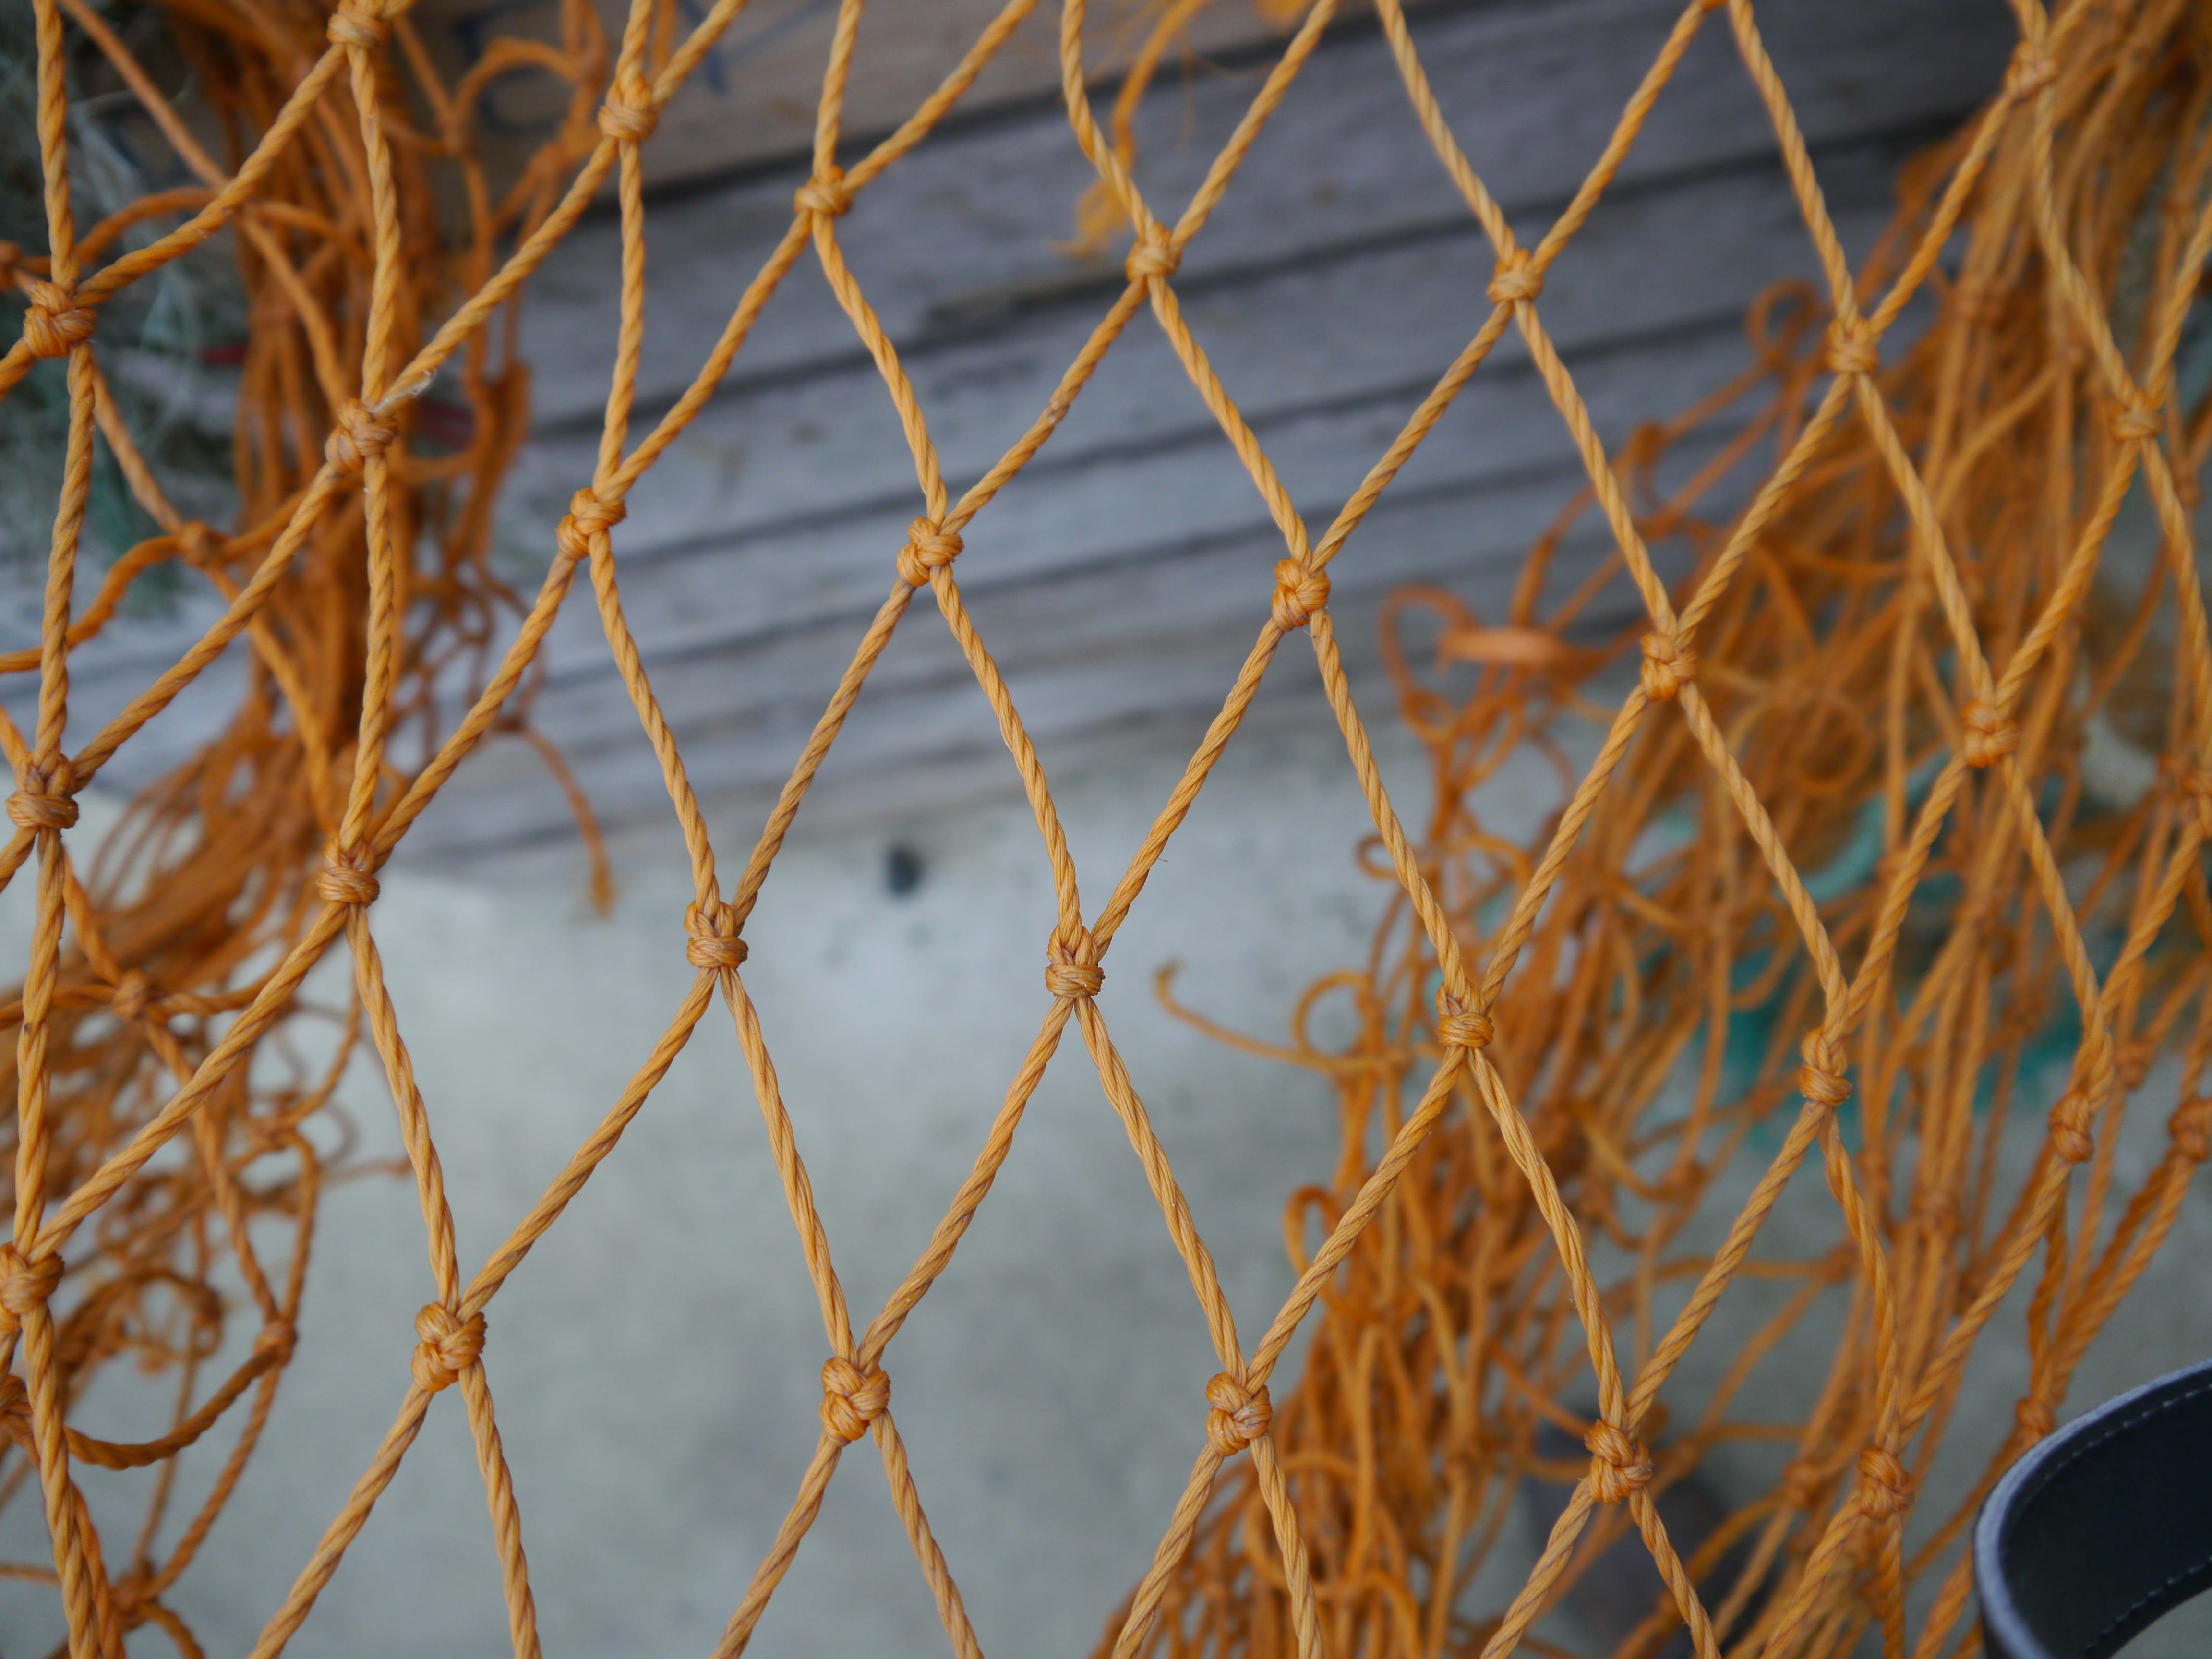 A close up of lightweight diamond mesh netting